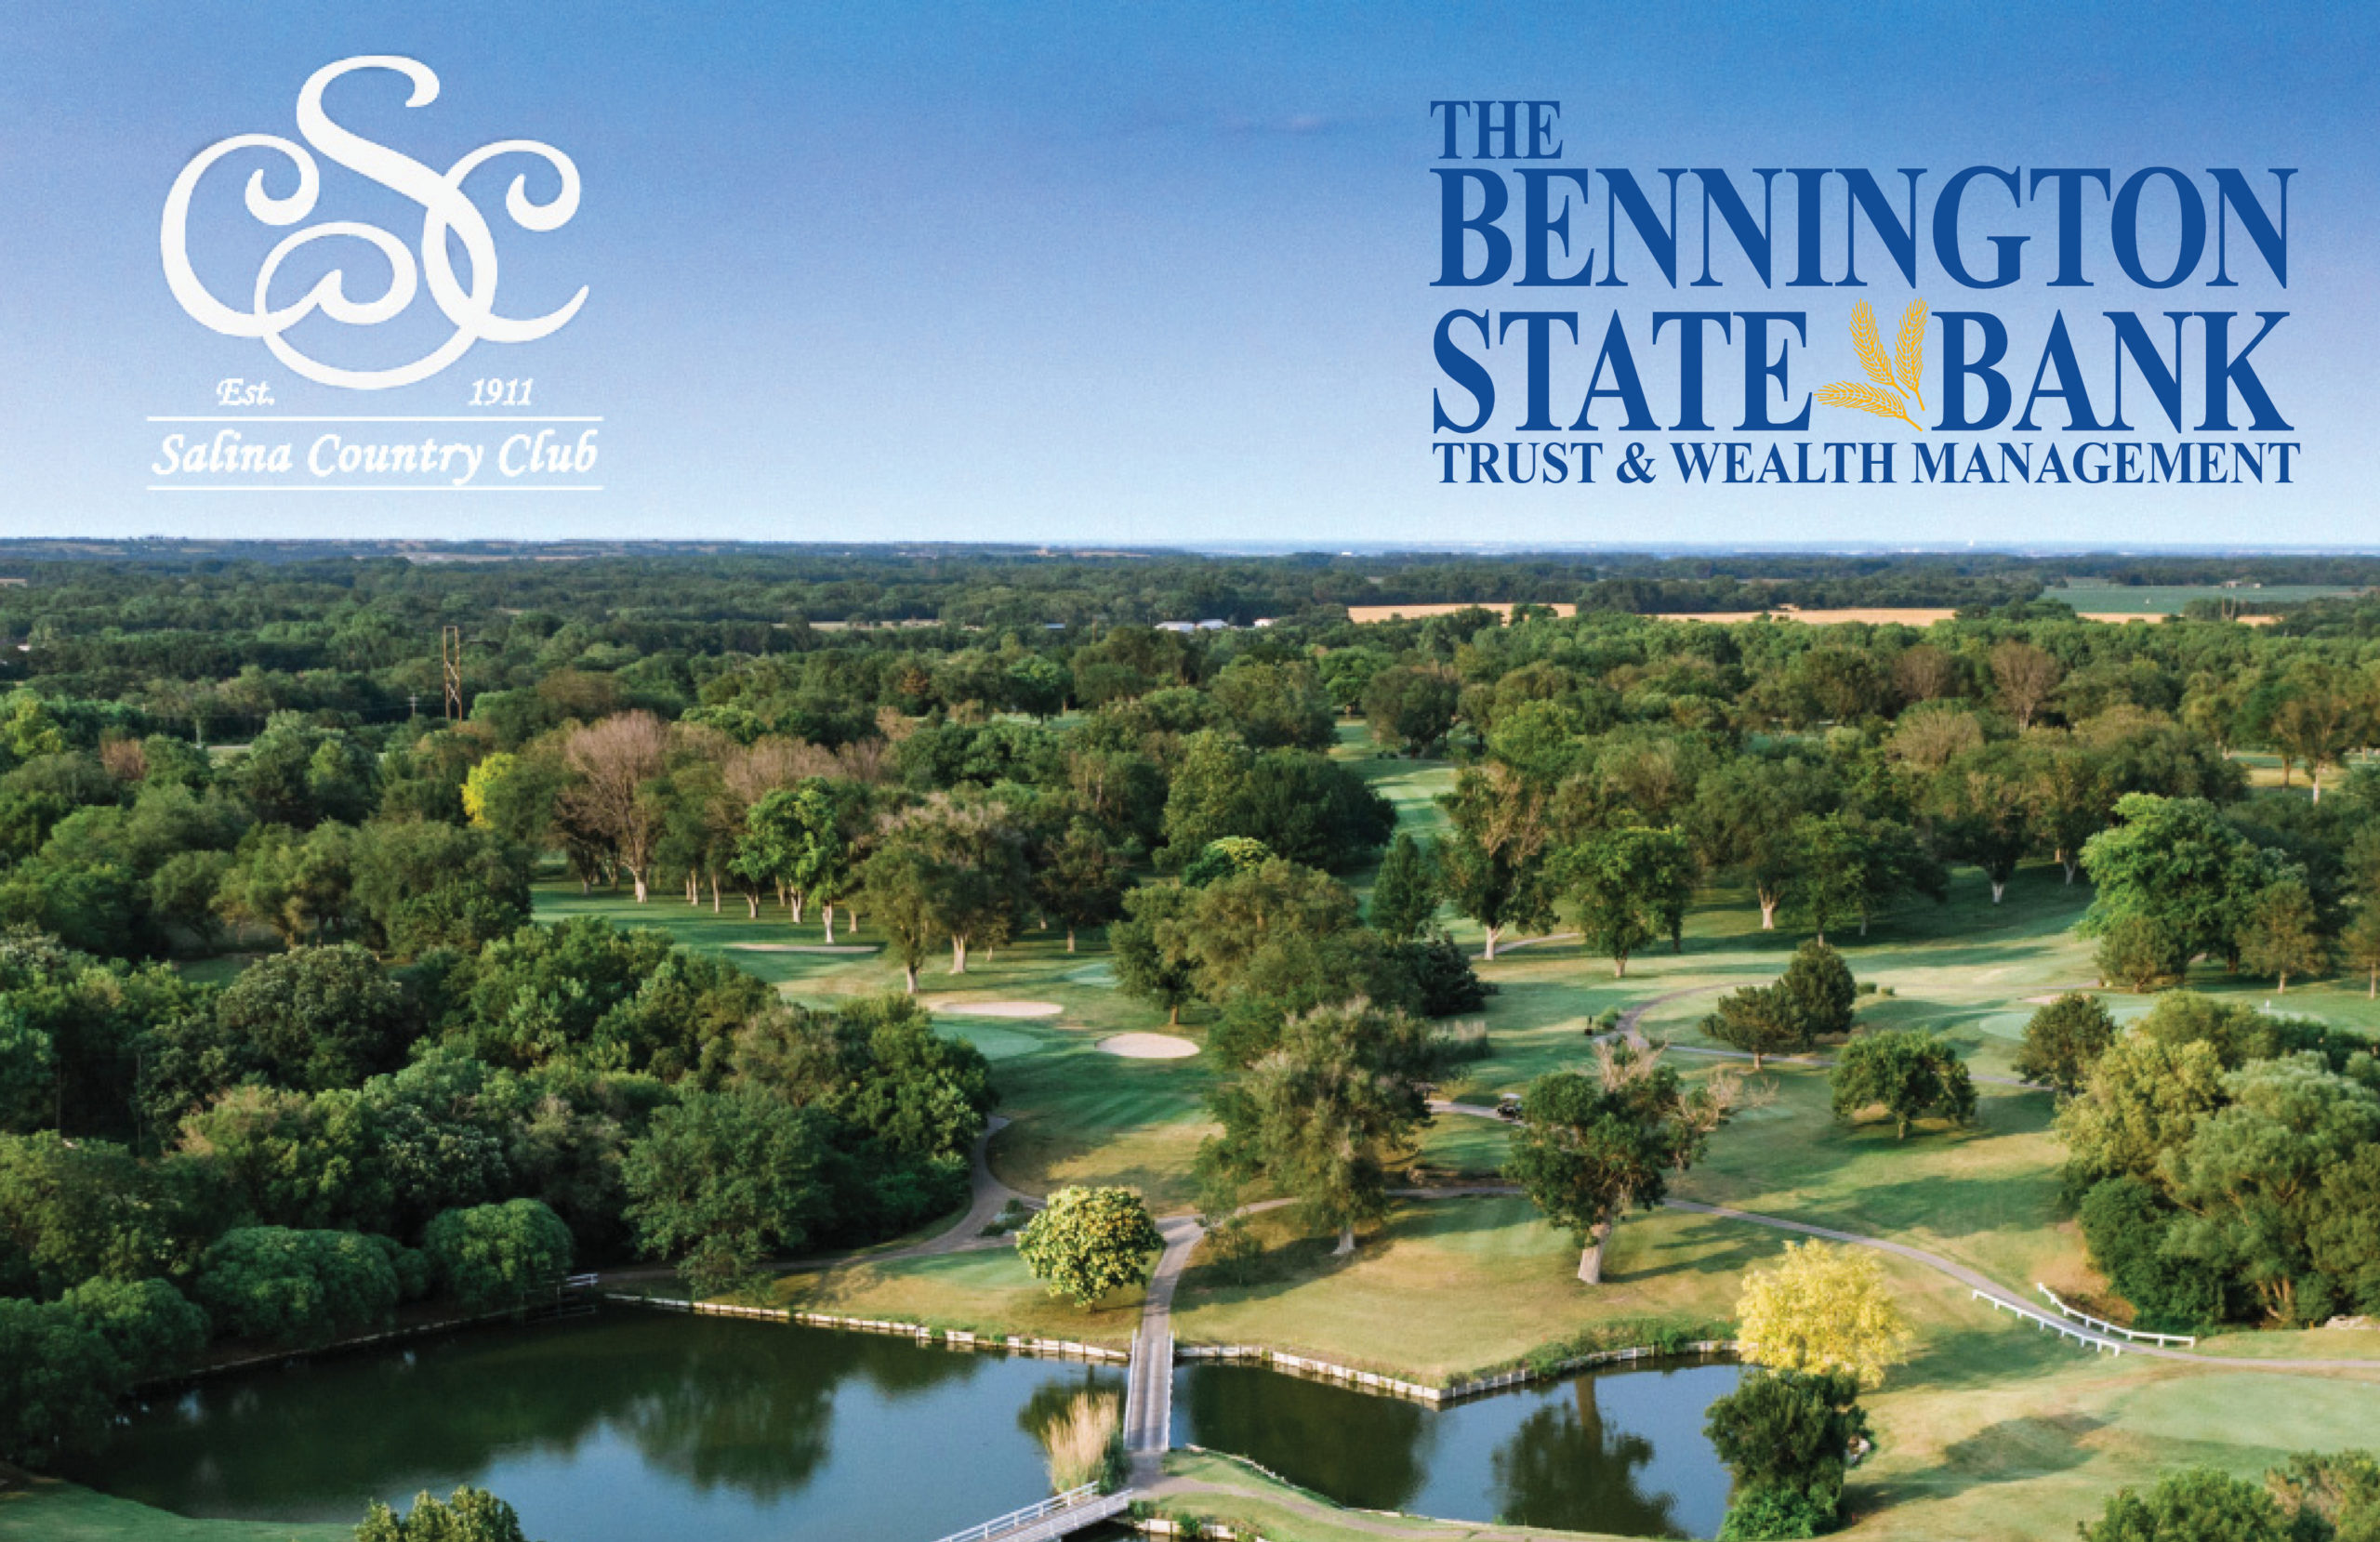 Bennington State Bank Title Sponsor 2022 Senior LPGA Championship Salina